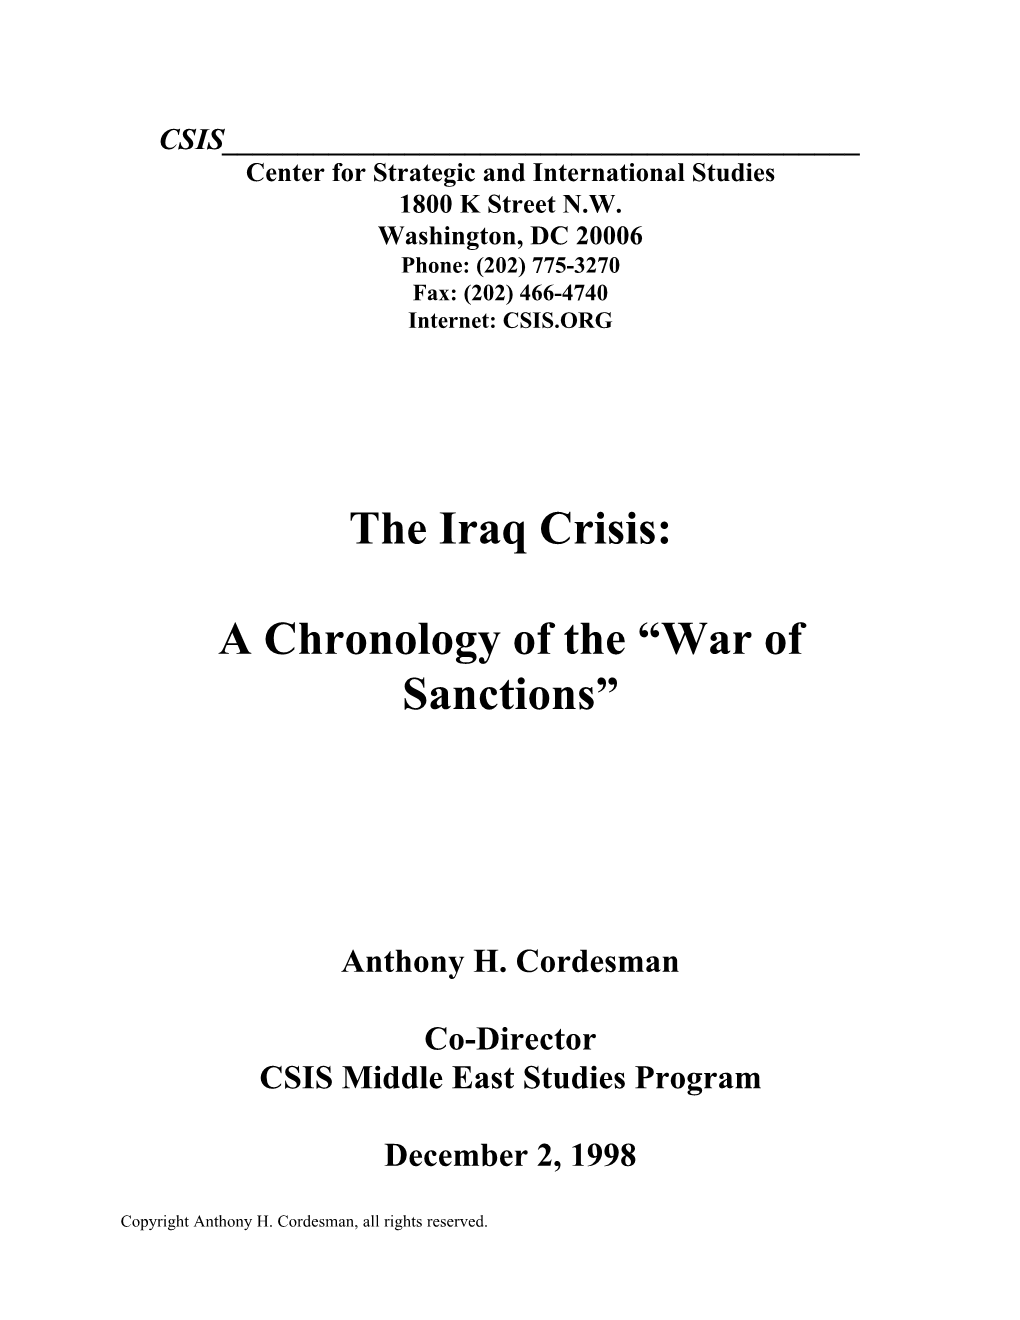 The Iraq Crisis